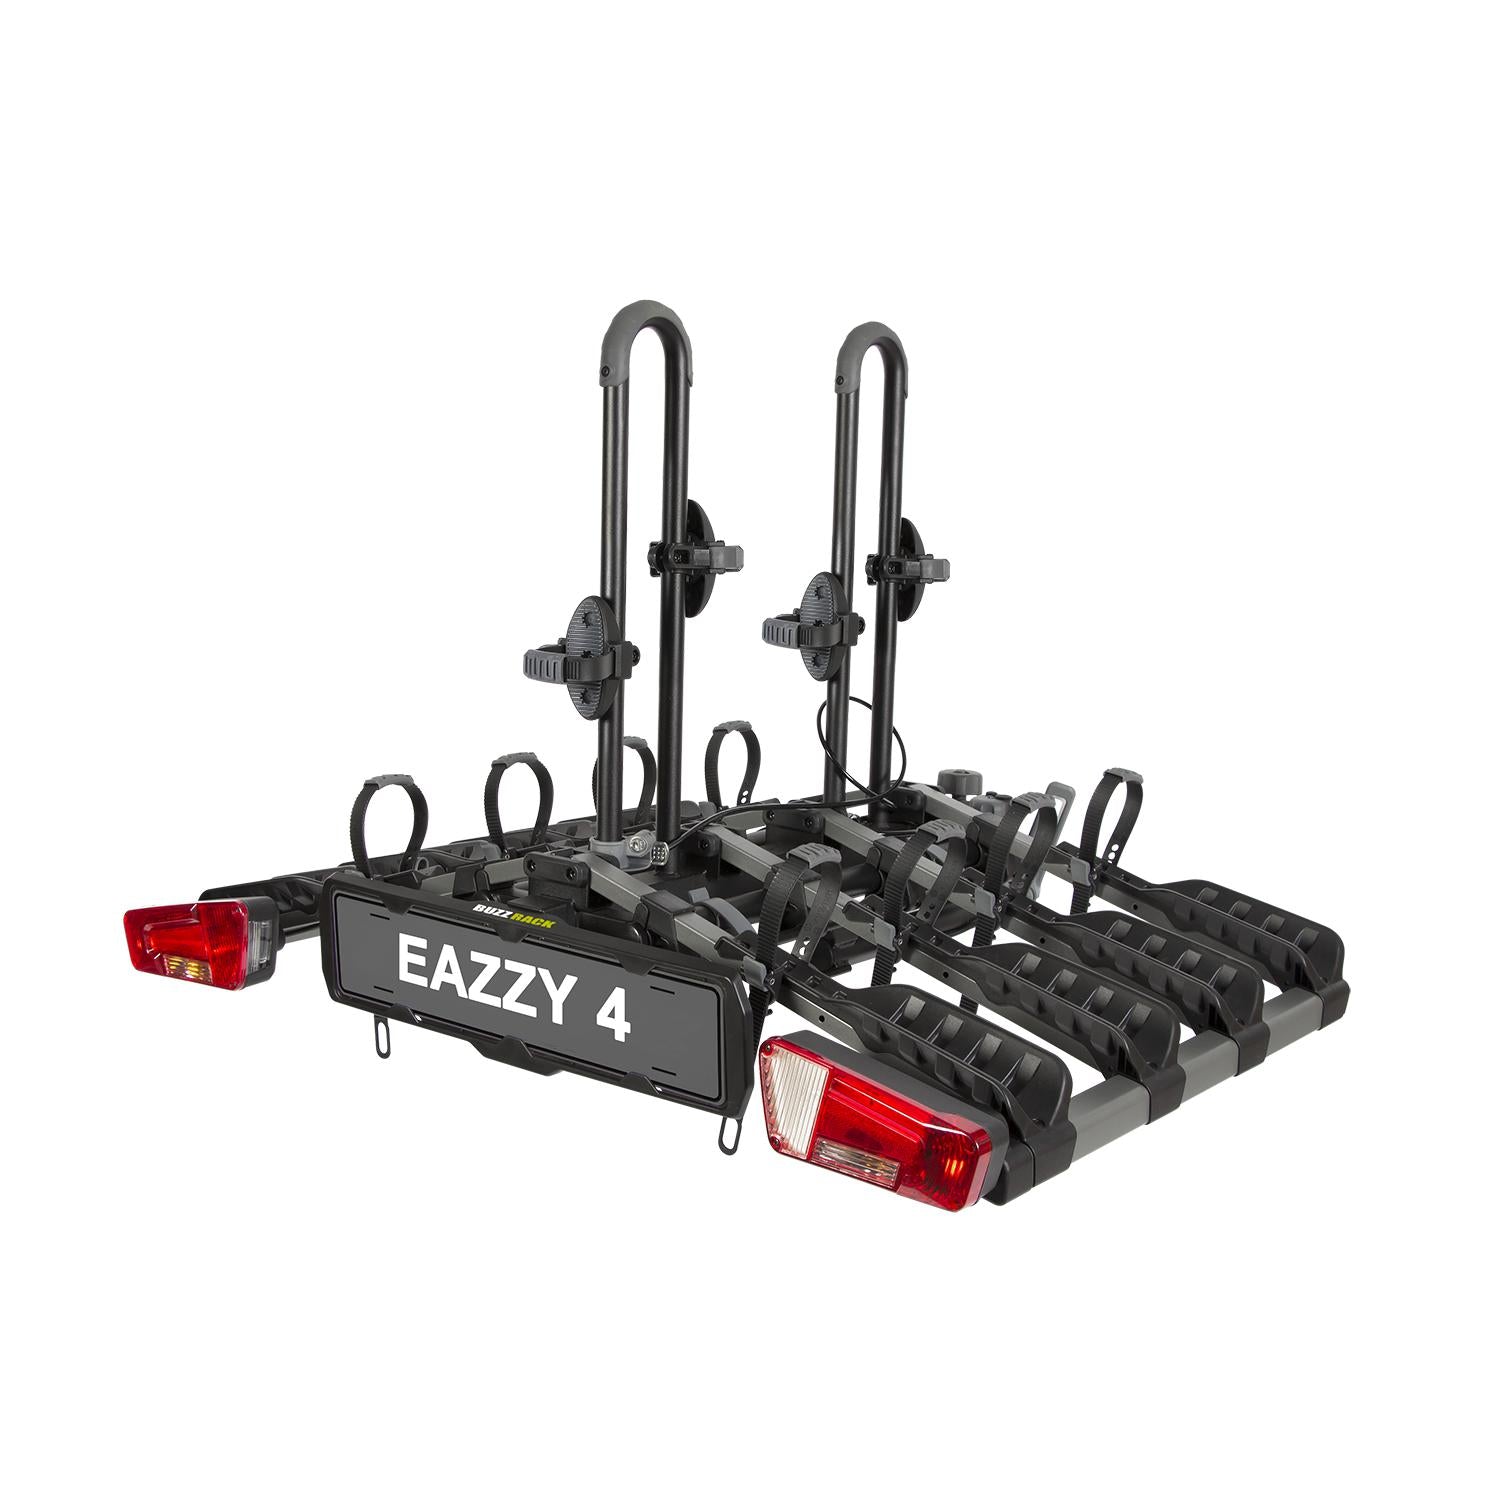 Buzzrack Eazzy 4 Foldable Platform Bike Carrier